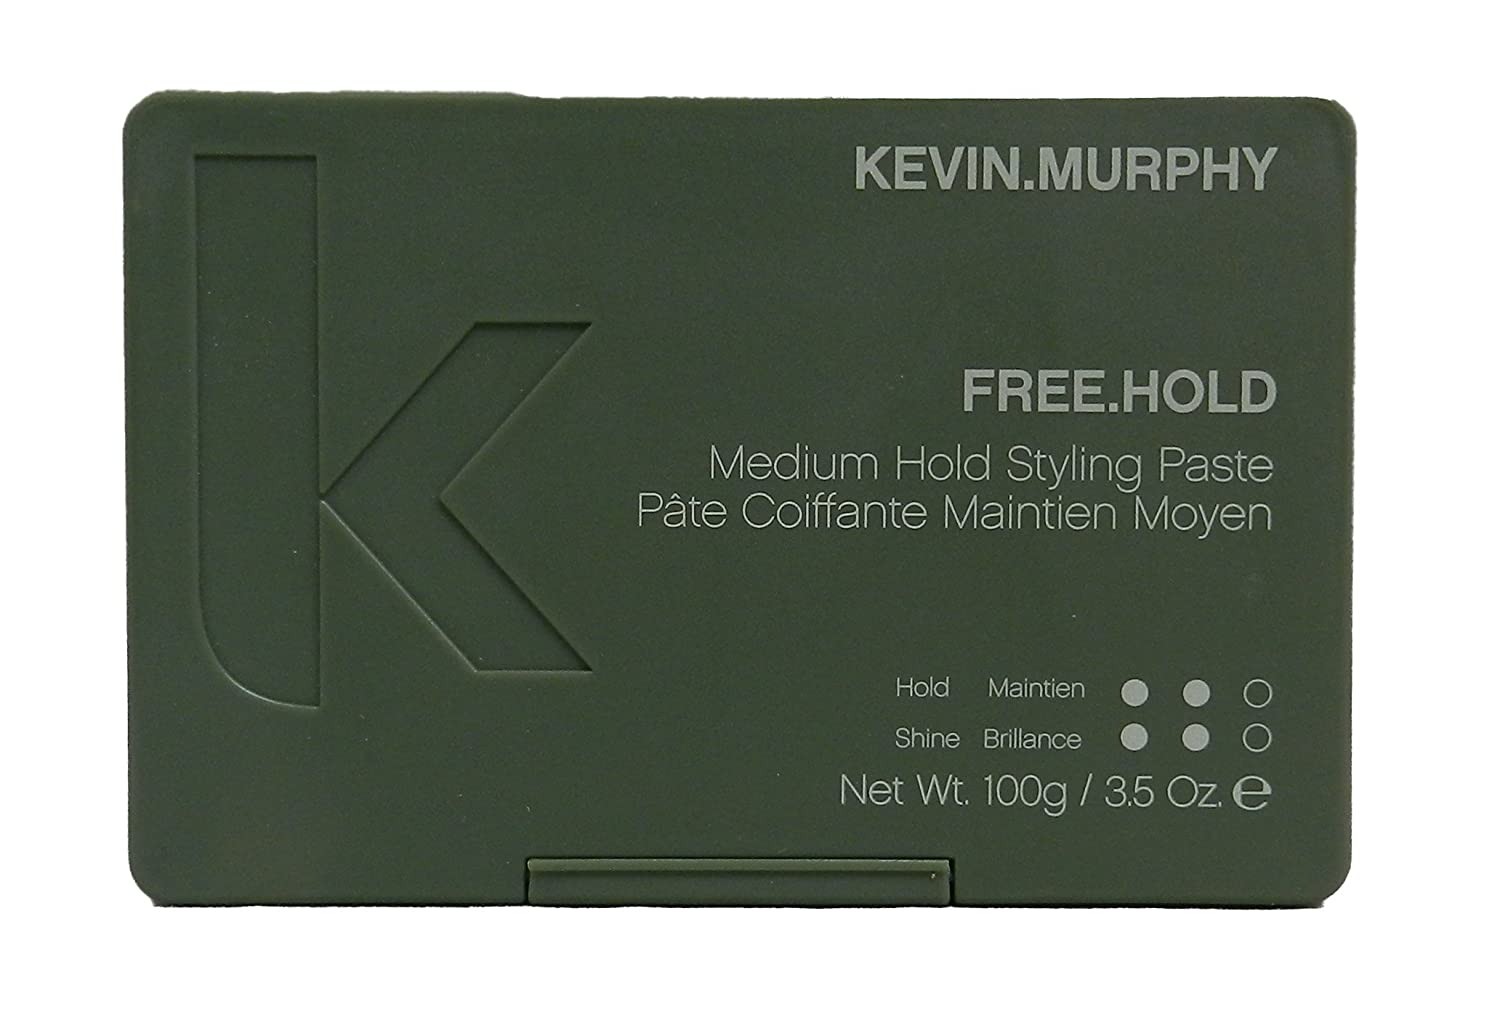 ''KEVIN MURPHY Free Hold Medium Hold Styling Paste NEW Formula, 3.4 Oz''